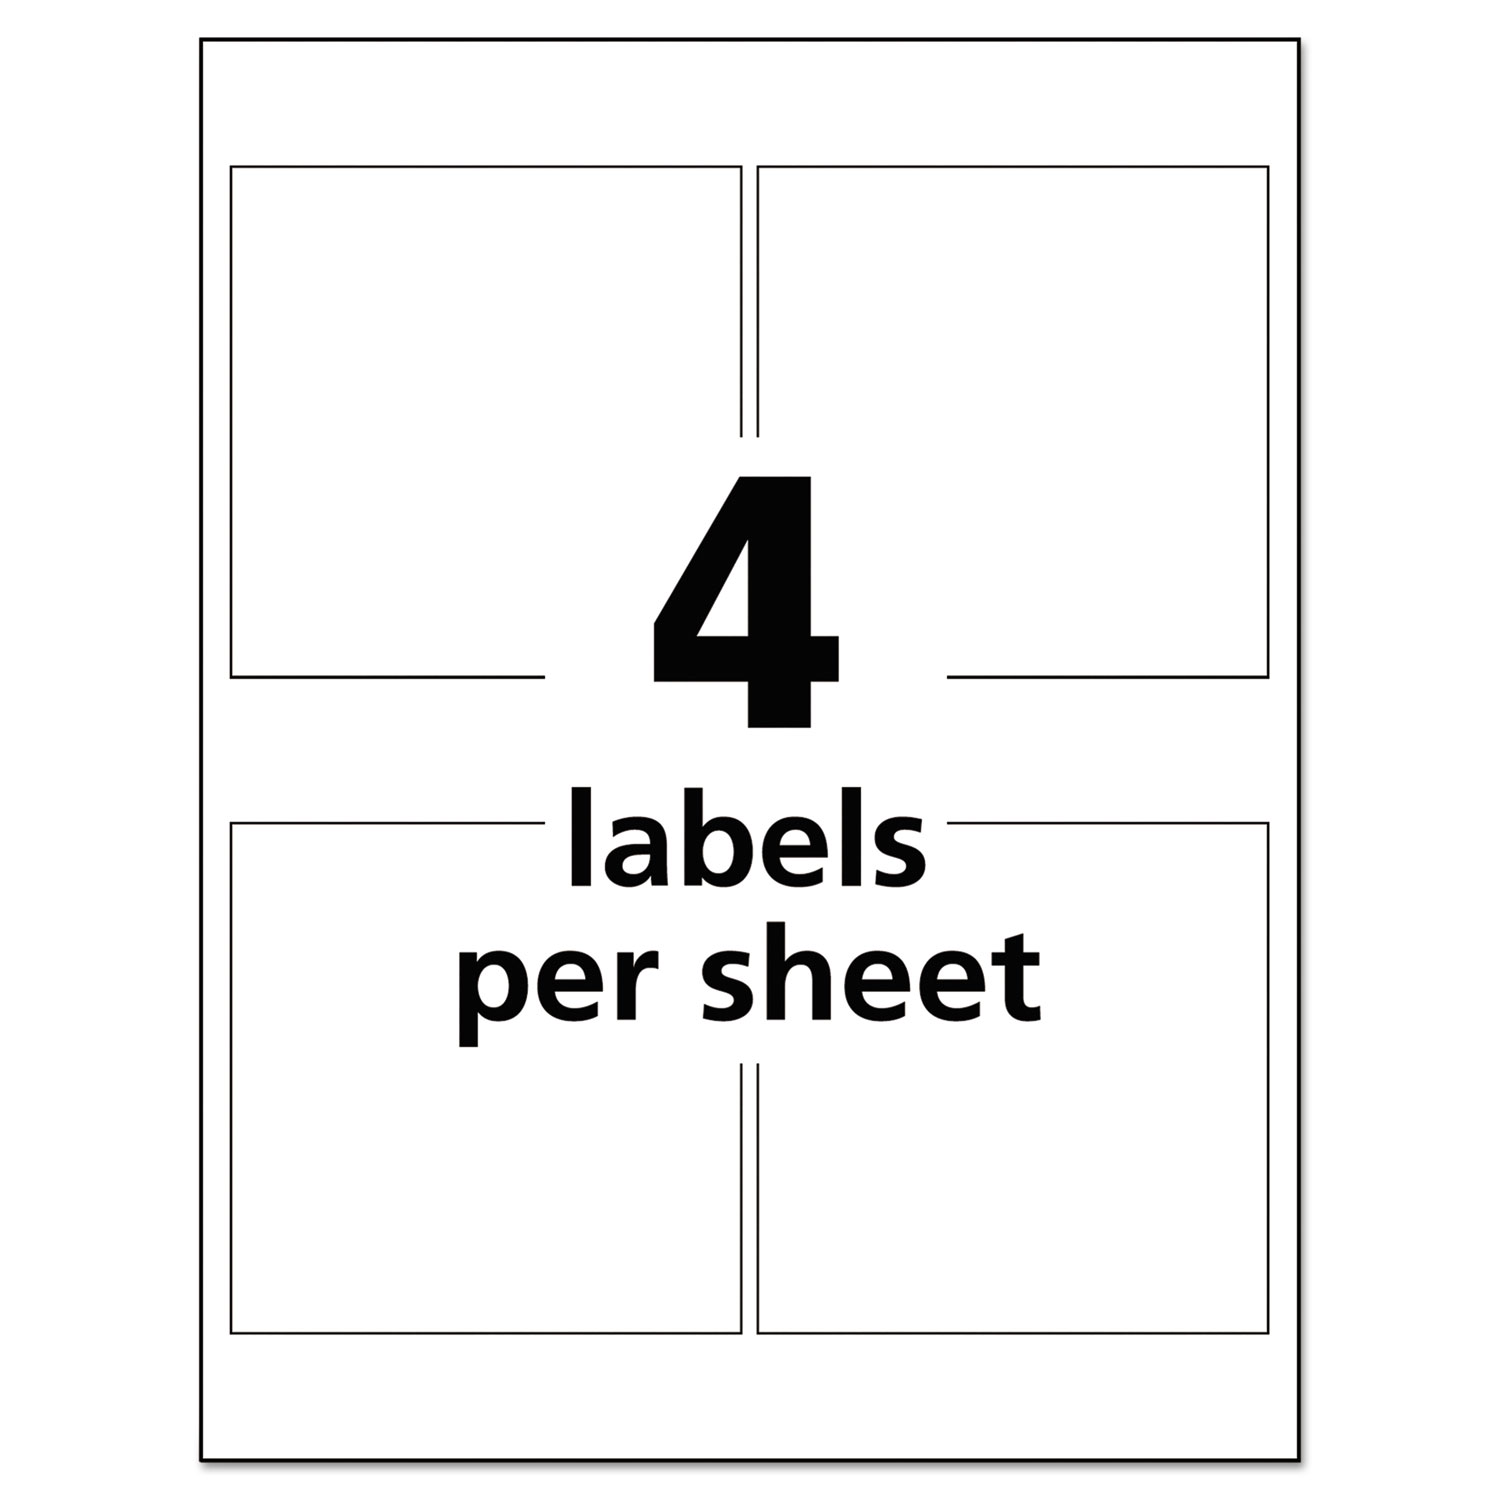 Easy Peel UltraDuty GHS Chemical Labels, Inkjet, 4 x 4 , 200/Pack